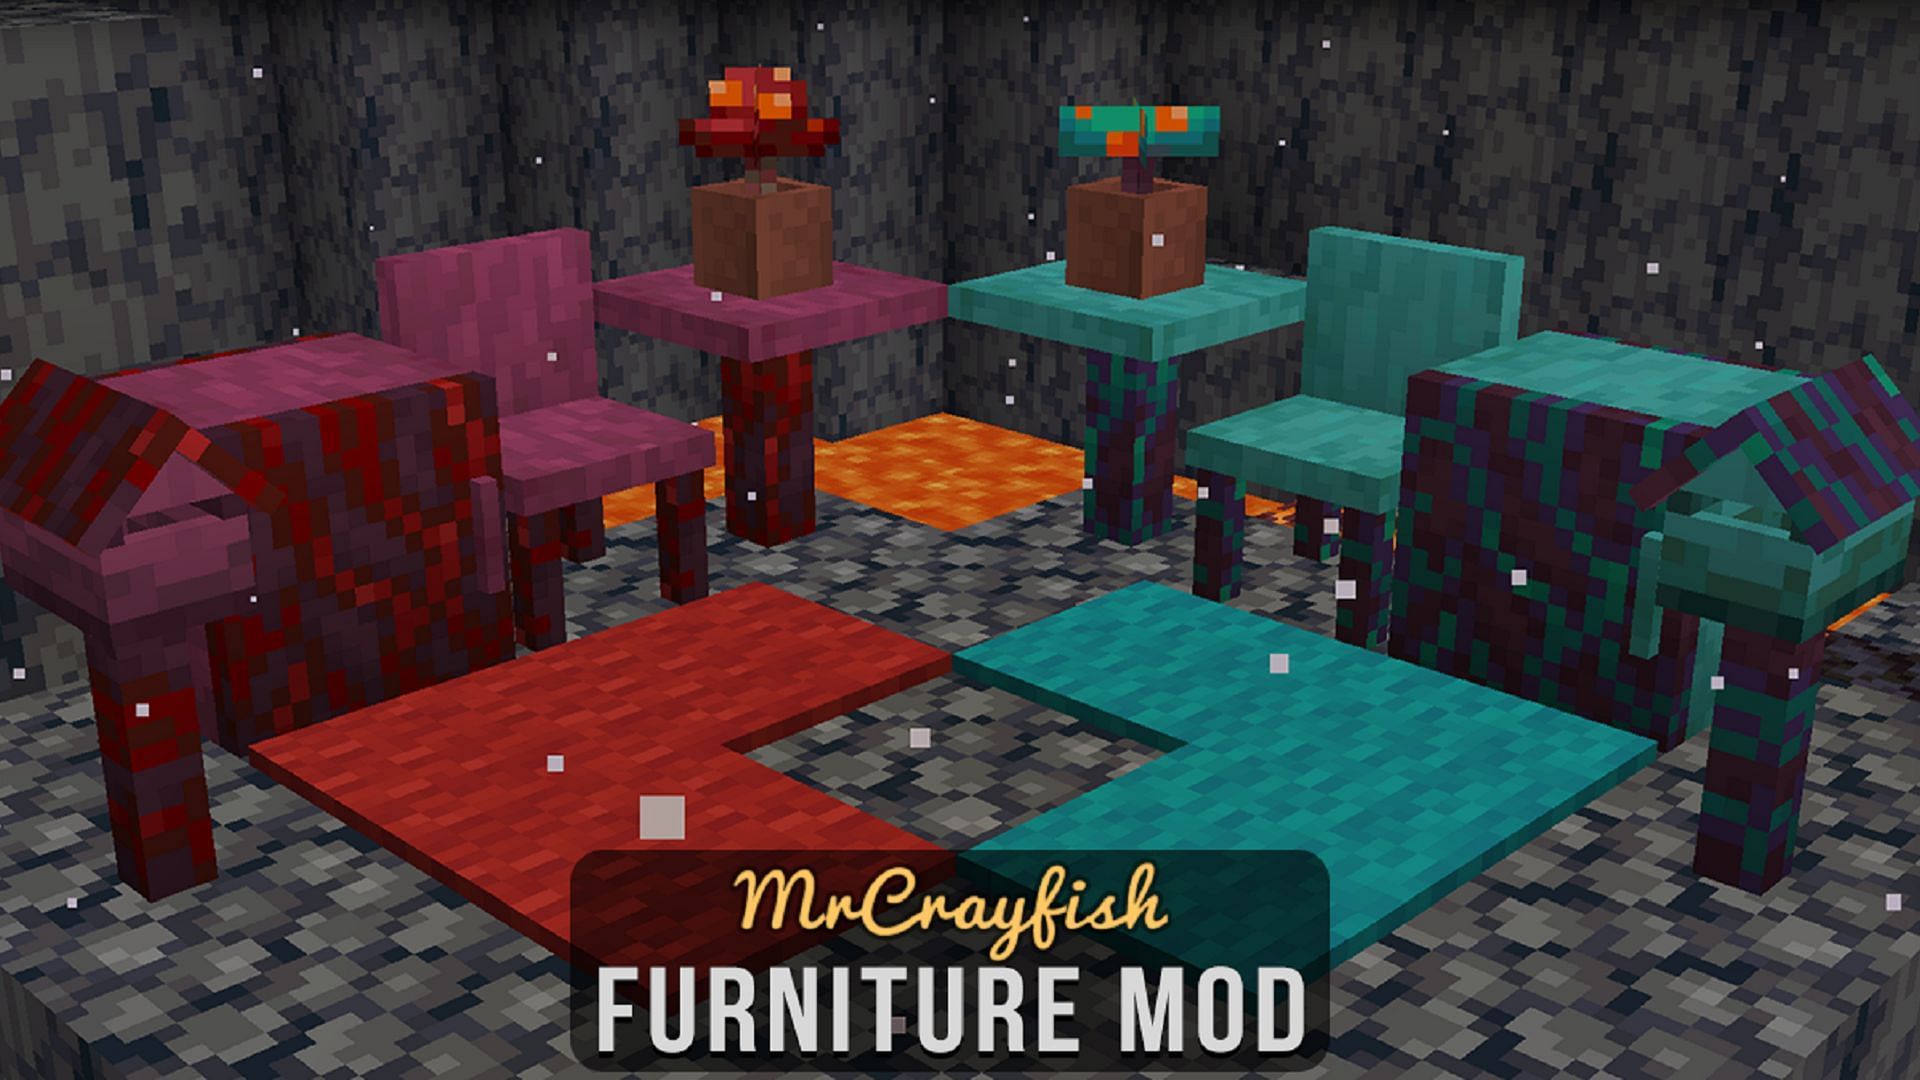 Building Gadgets - Minecraft Mods - CurseForge